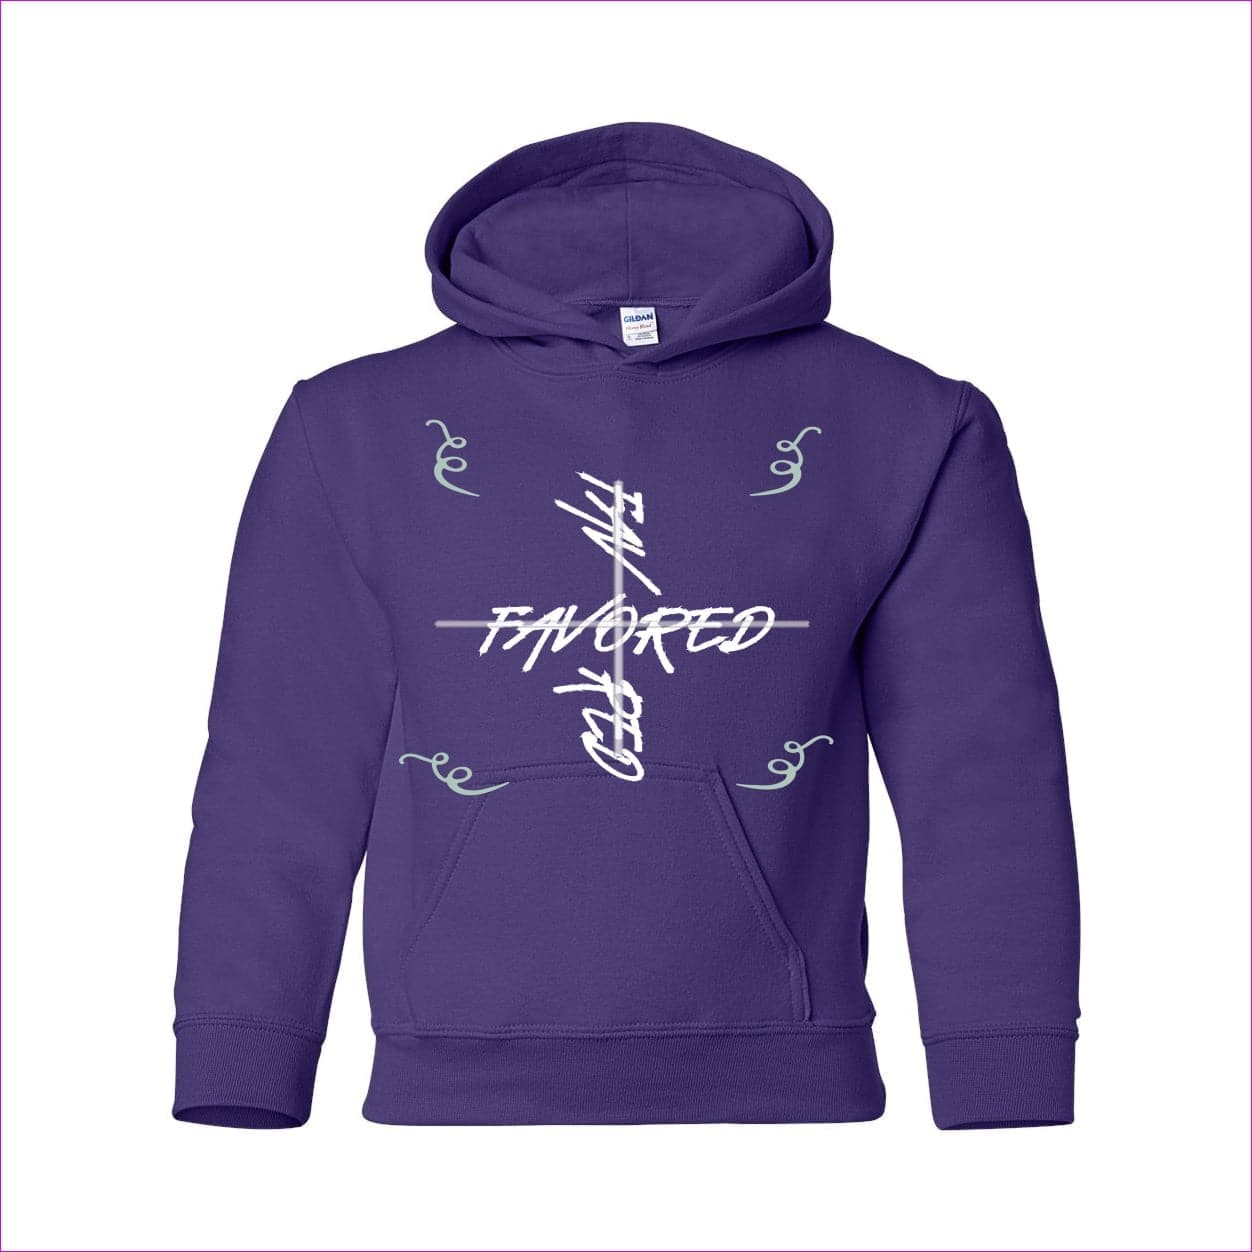 Purple - Favored 2 Heavy Blend Youth Hooded Sweatshirt - kids hoodies at TFC&H Co.